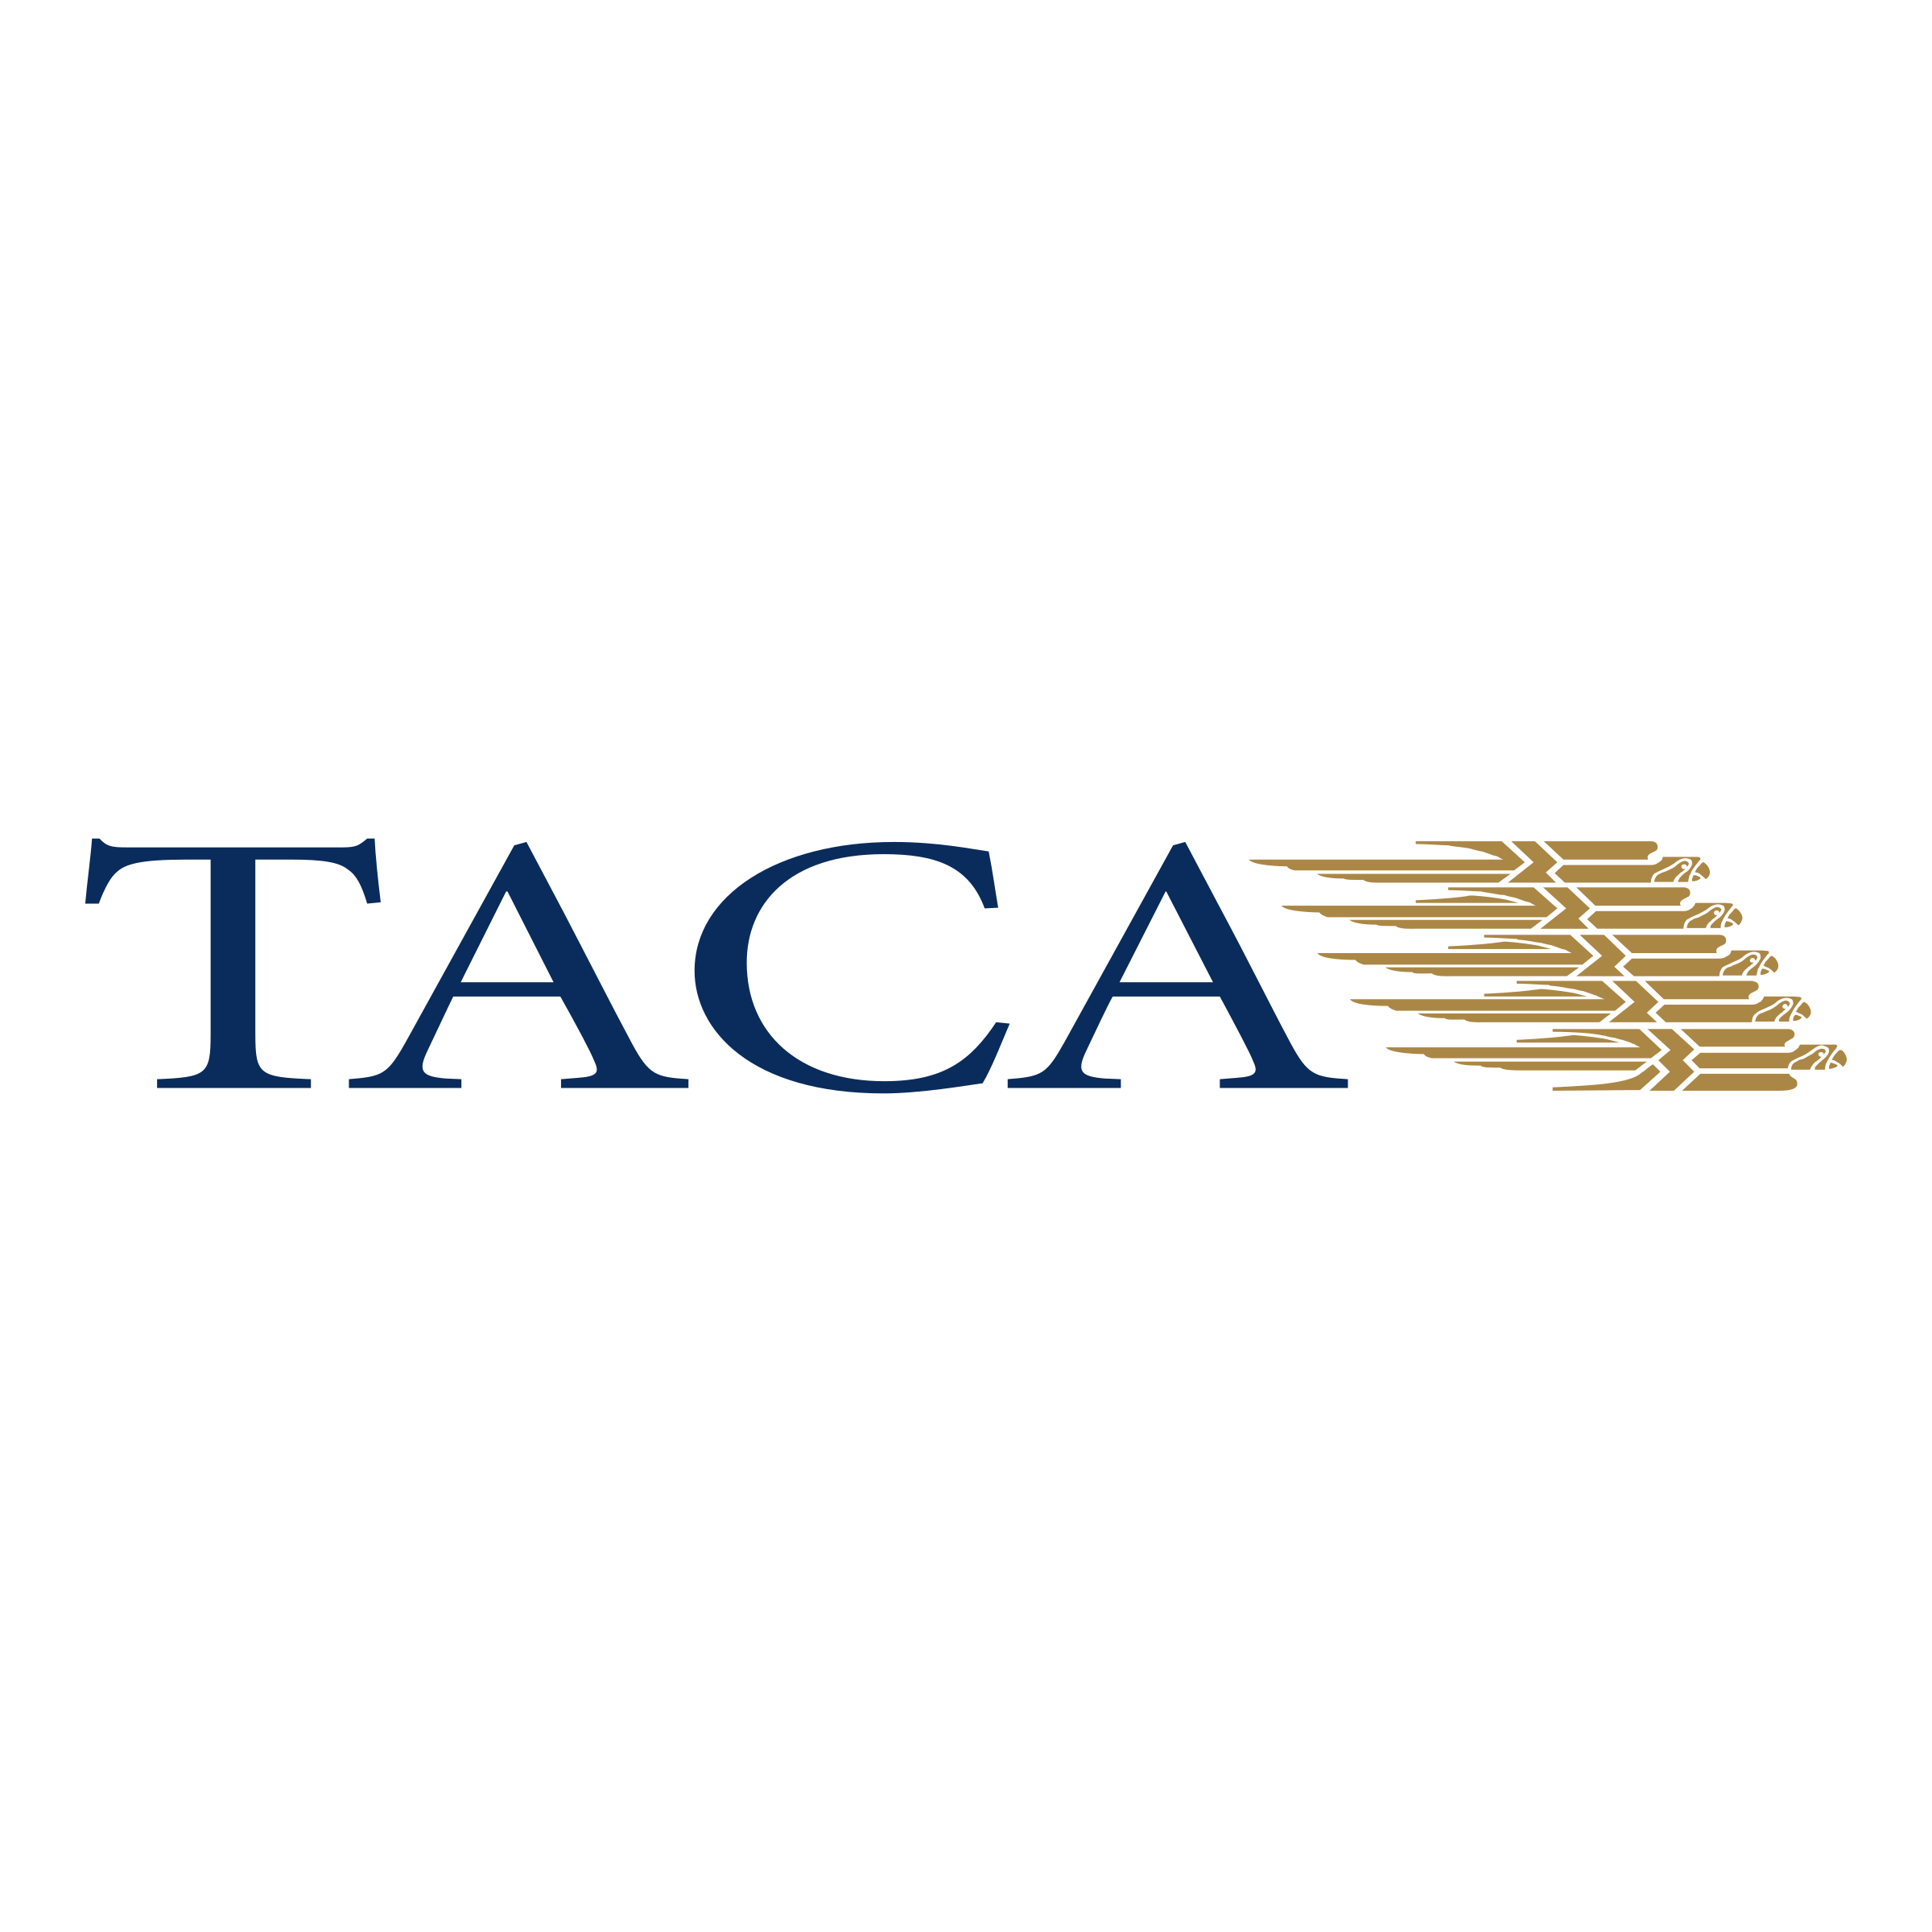 Taca Logo - TACA Logo PNG Transparent & SVG Vector - Freebie Supply